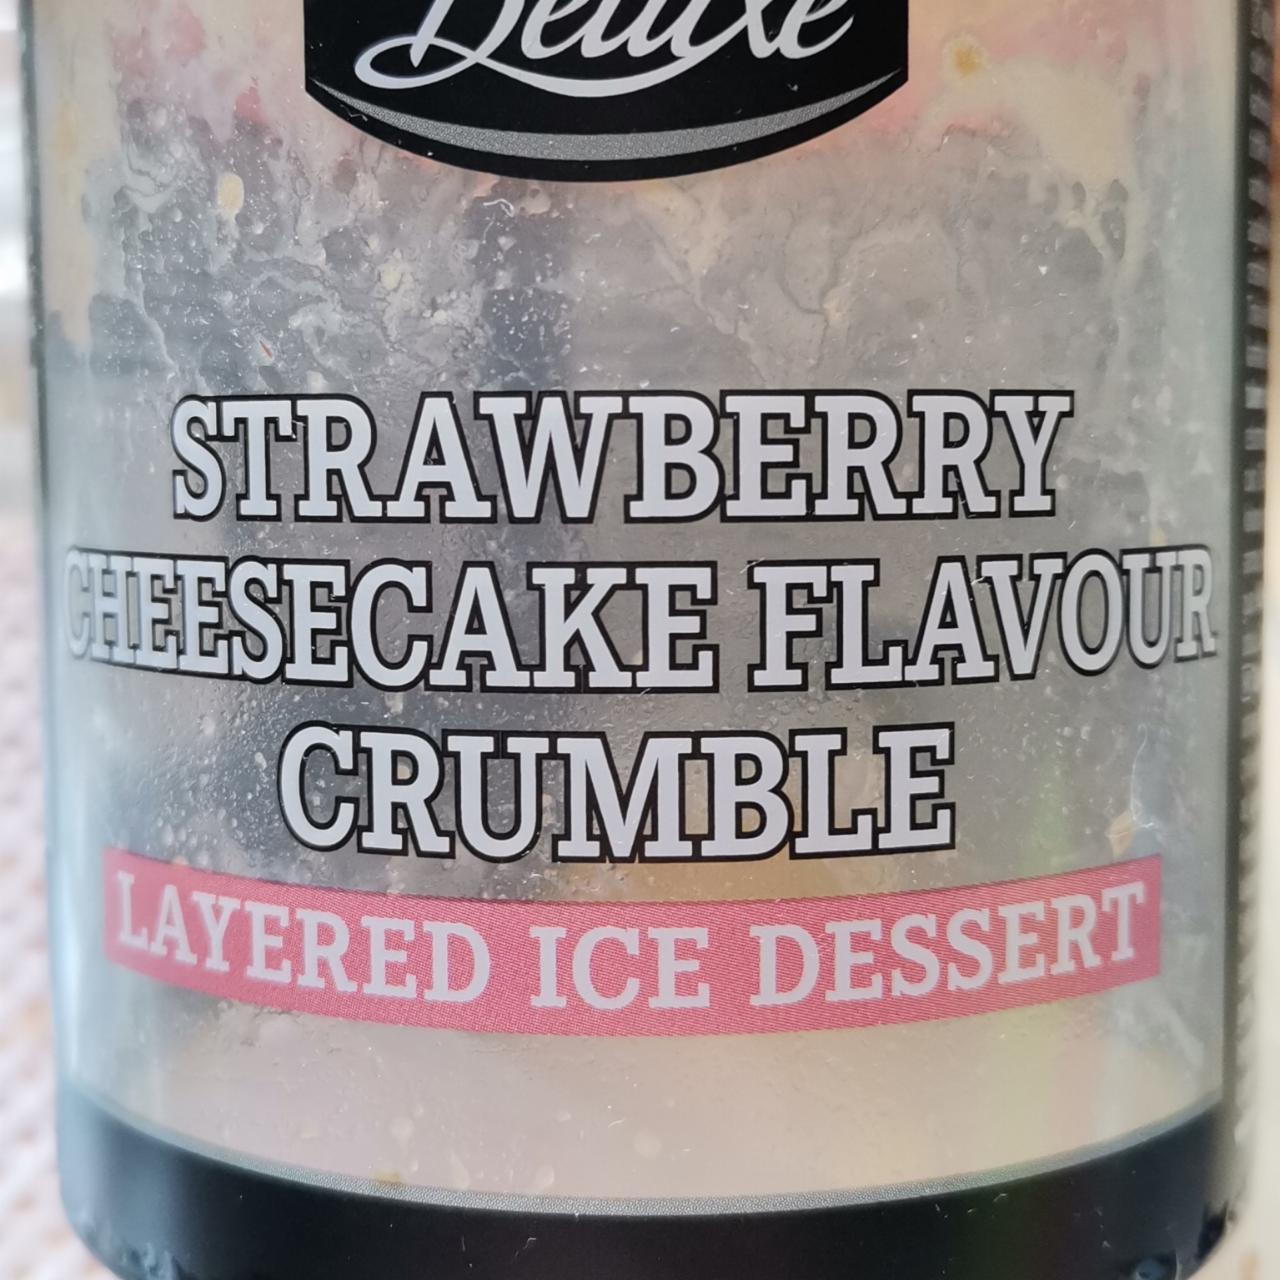 Fotografie - Strawberry cheesecake flavour cramble layered ice dessert Deluxe